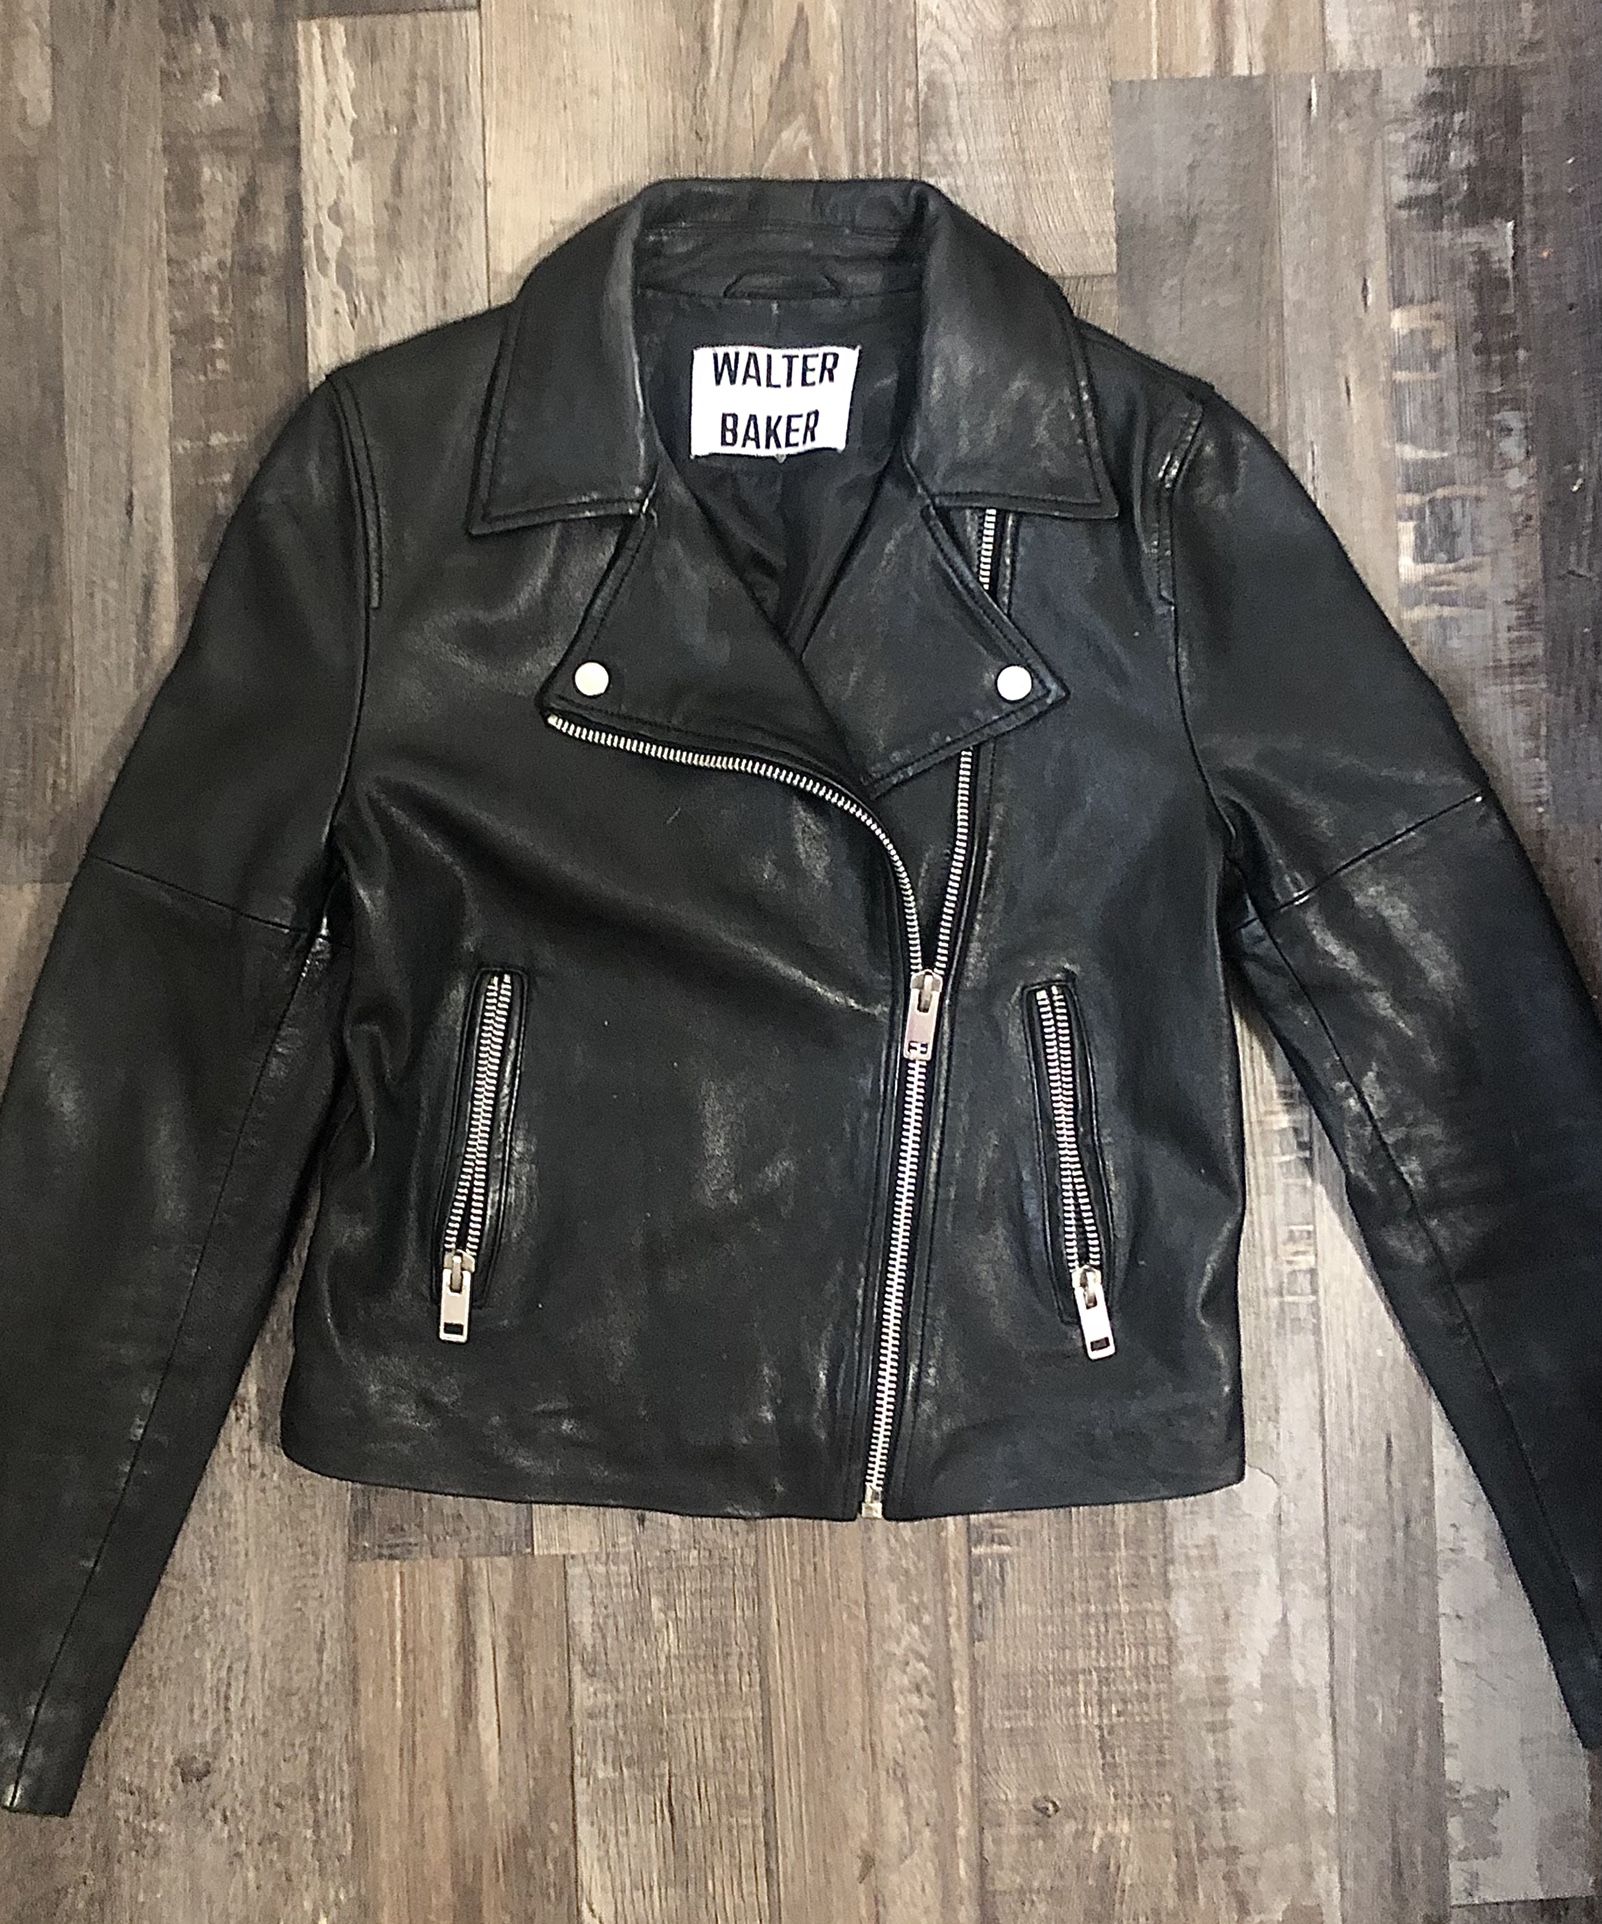 Walter Baker Leather Jacket